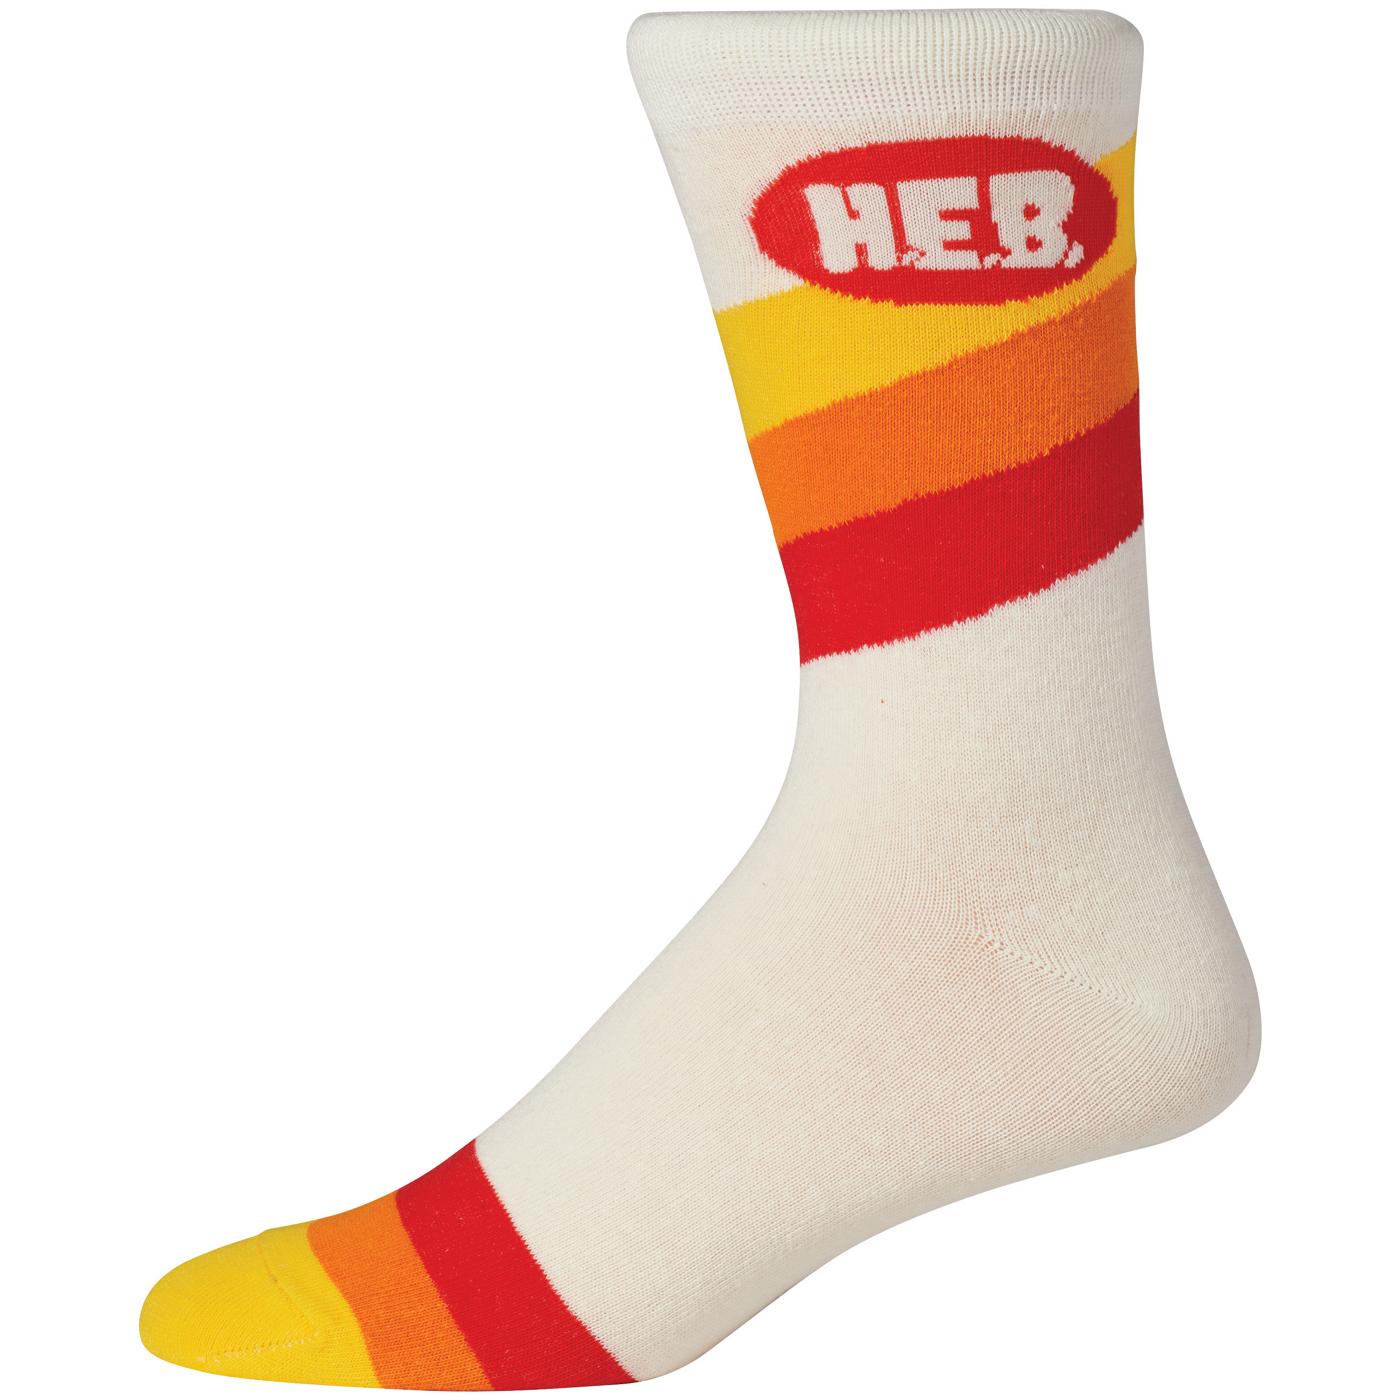 gaa socks, gaa socks Suppliers and Manufacturers at